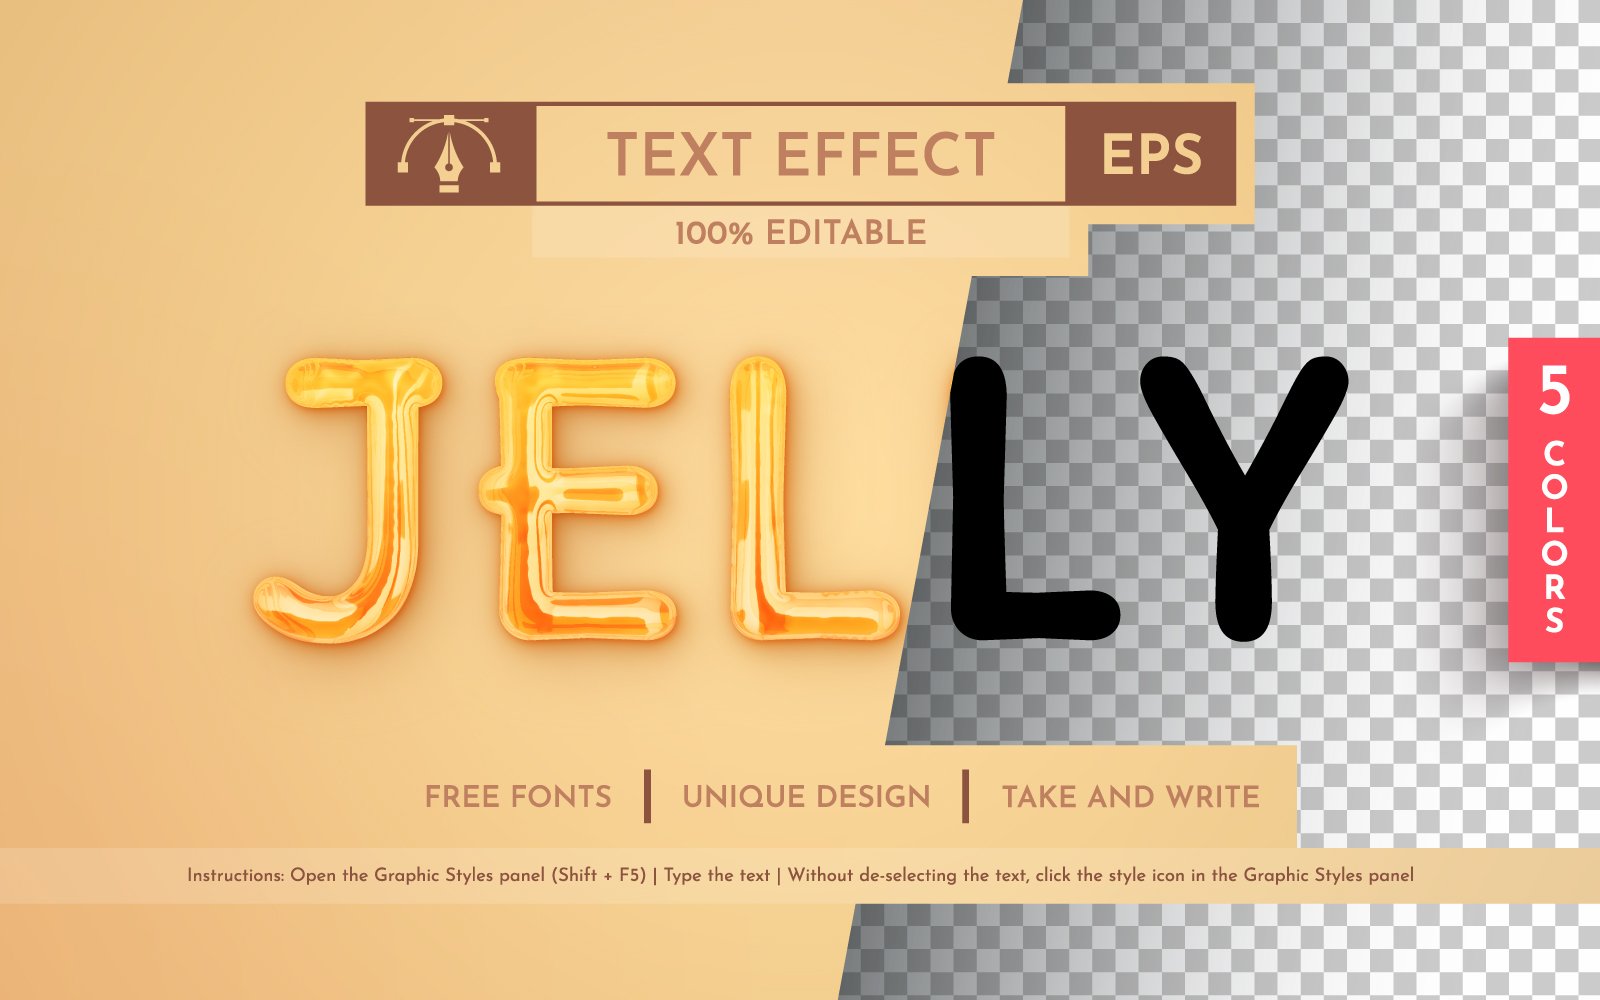 Template #405090 Text Effect Webdesign Template - Logo template Preview